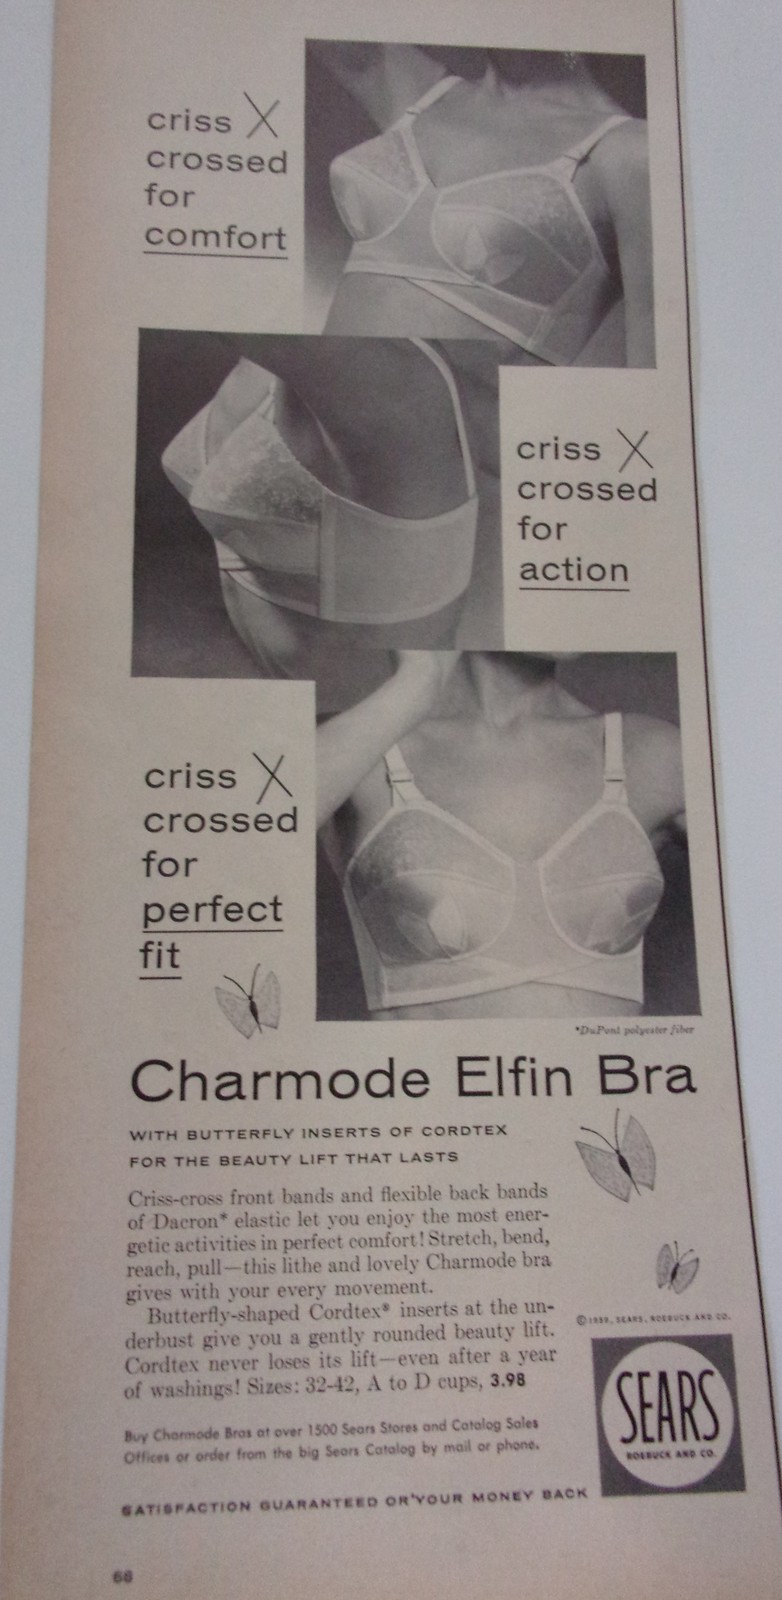 Sears Charmonde Elfin Bra Magazine Print Ad 1959 - $3.99